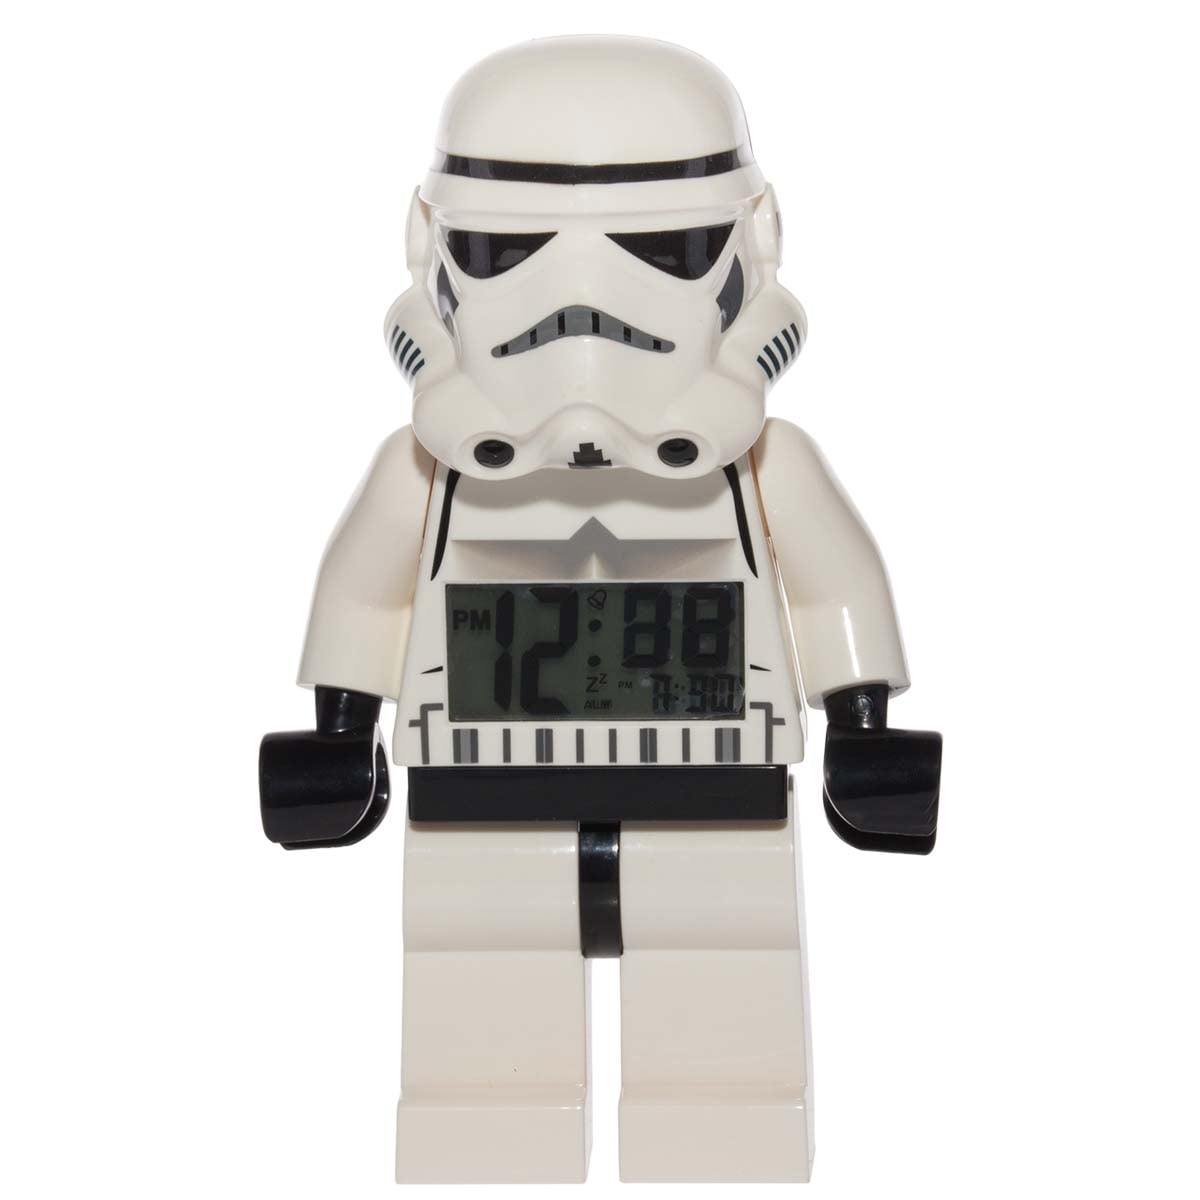 organ arve Slagskib LEGO Digital Alarm Clock - Walmart.com